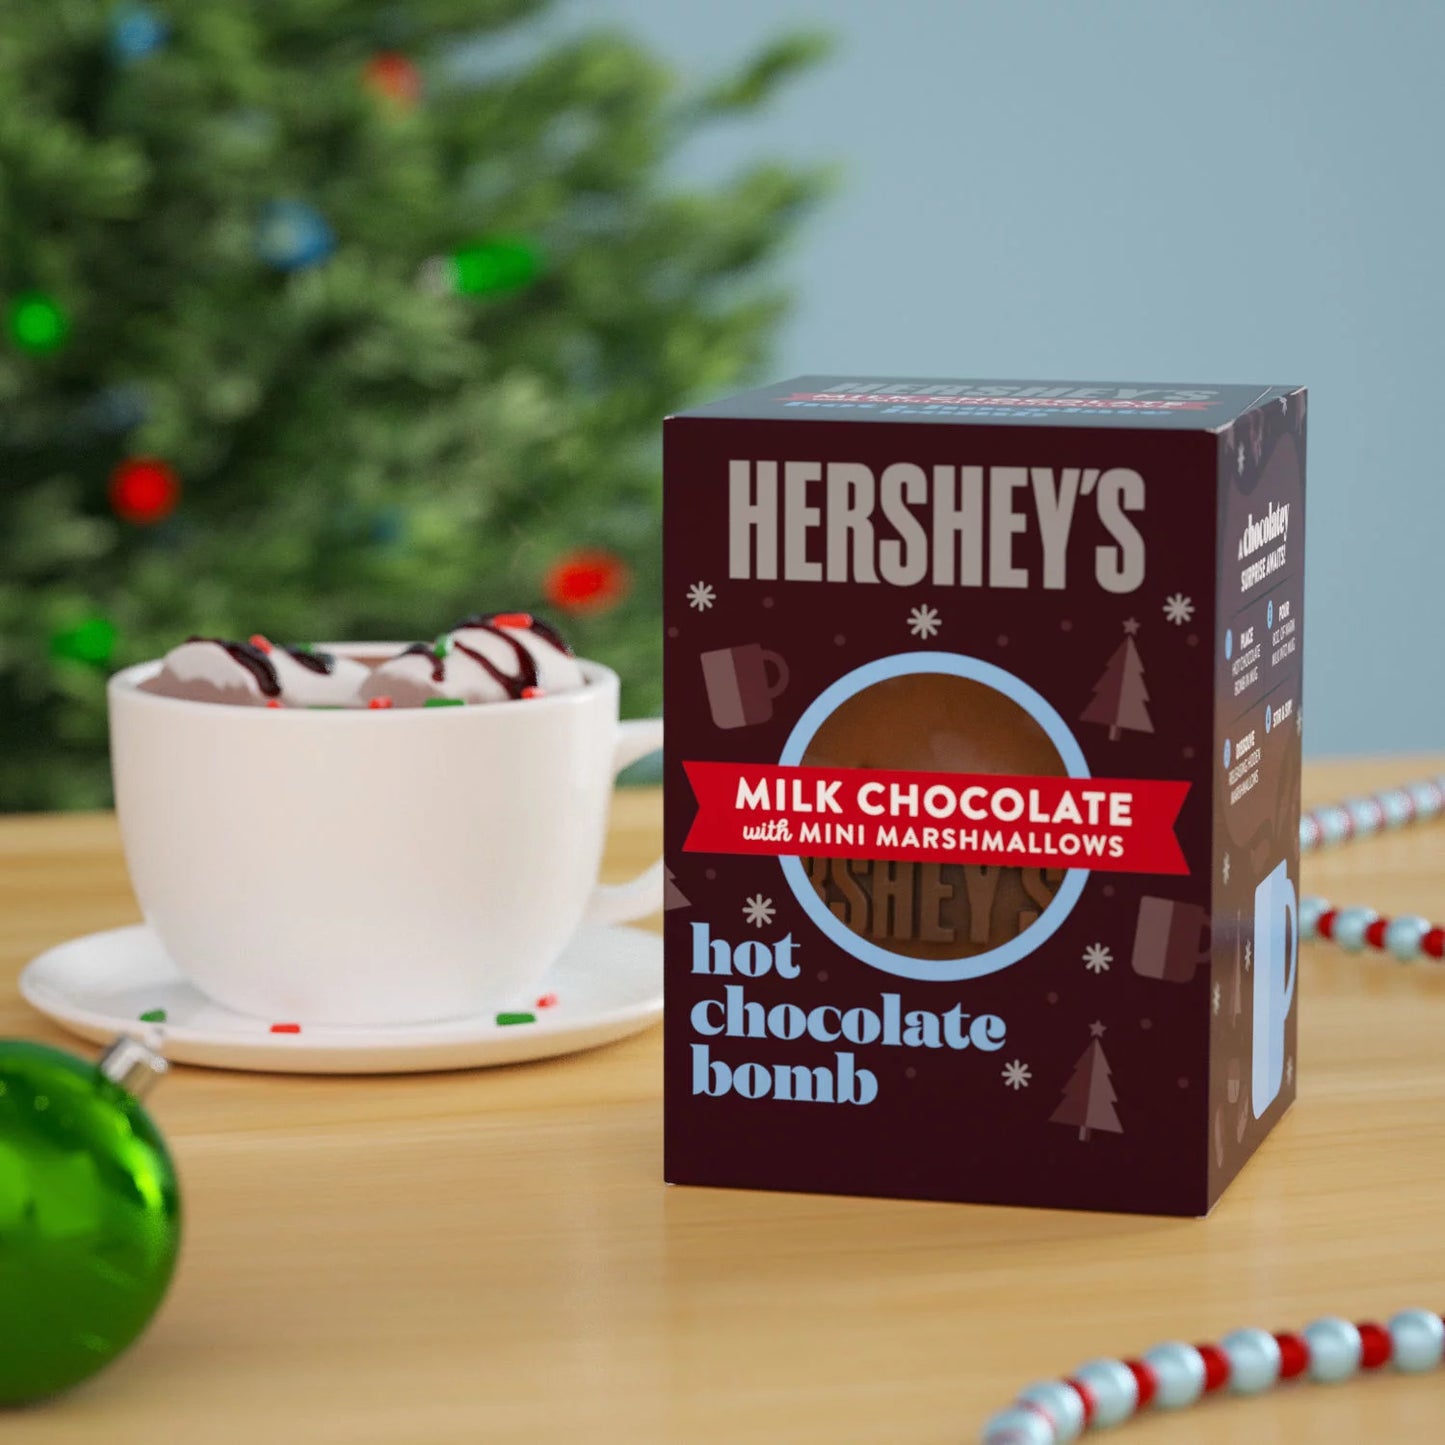 HERSHEY'S, Milk Chocolate with Mini Marshmallows Hot Chocolate Bomb, Christmas Candy, 1.25 oz, Gift Box